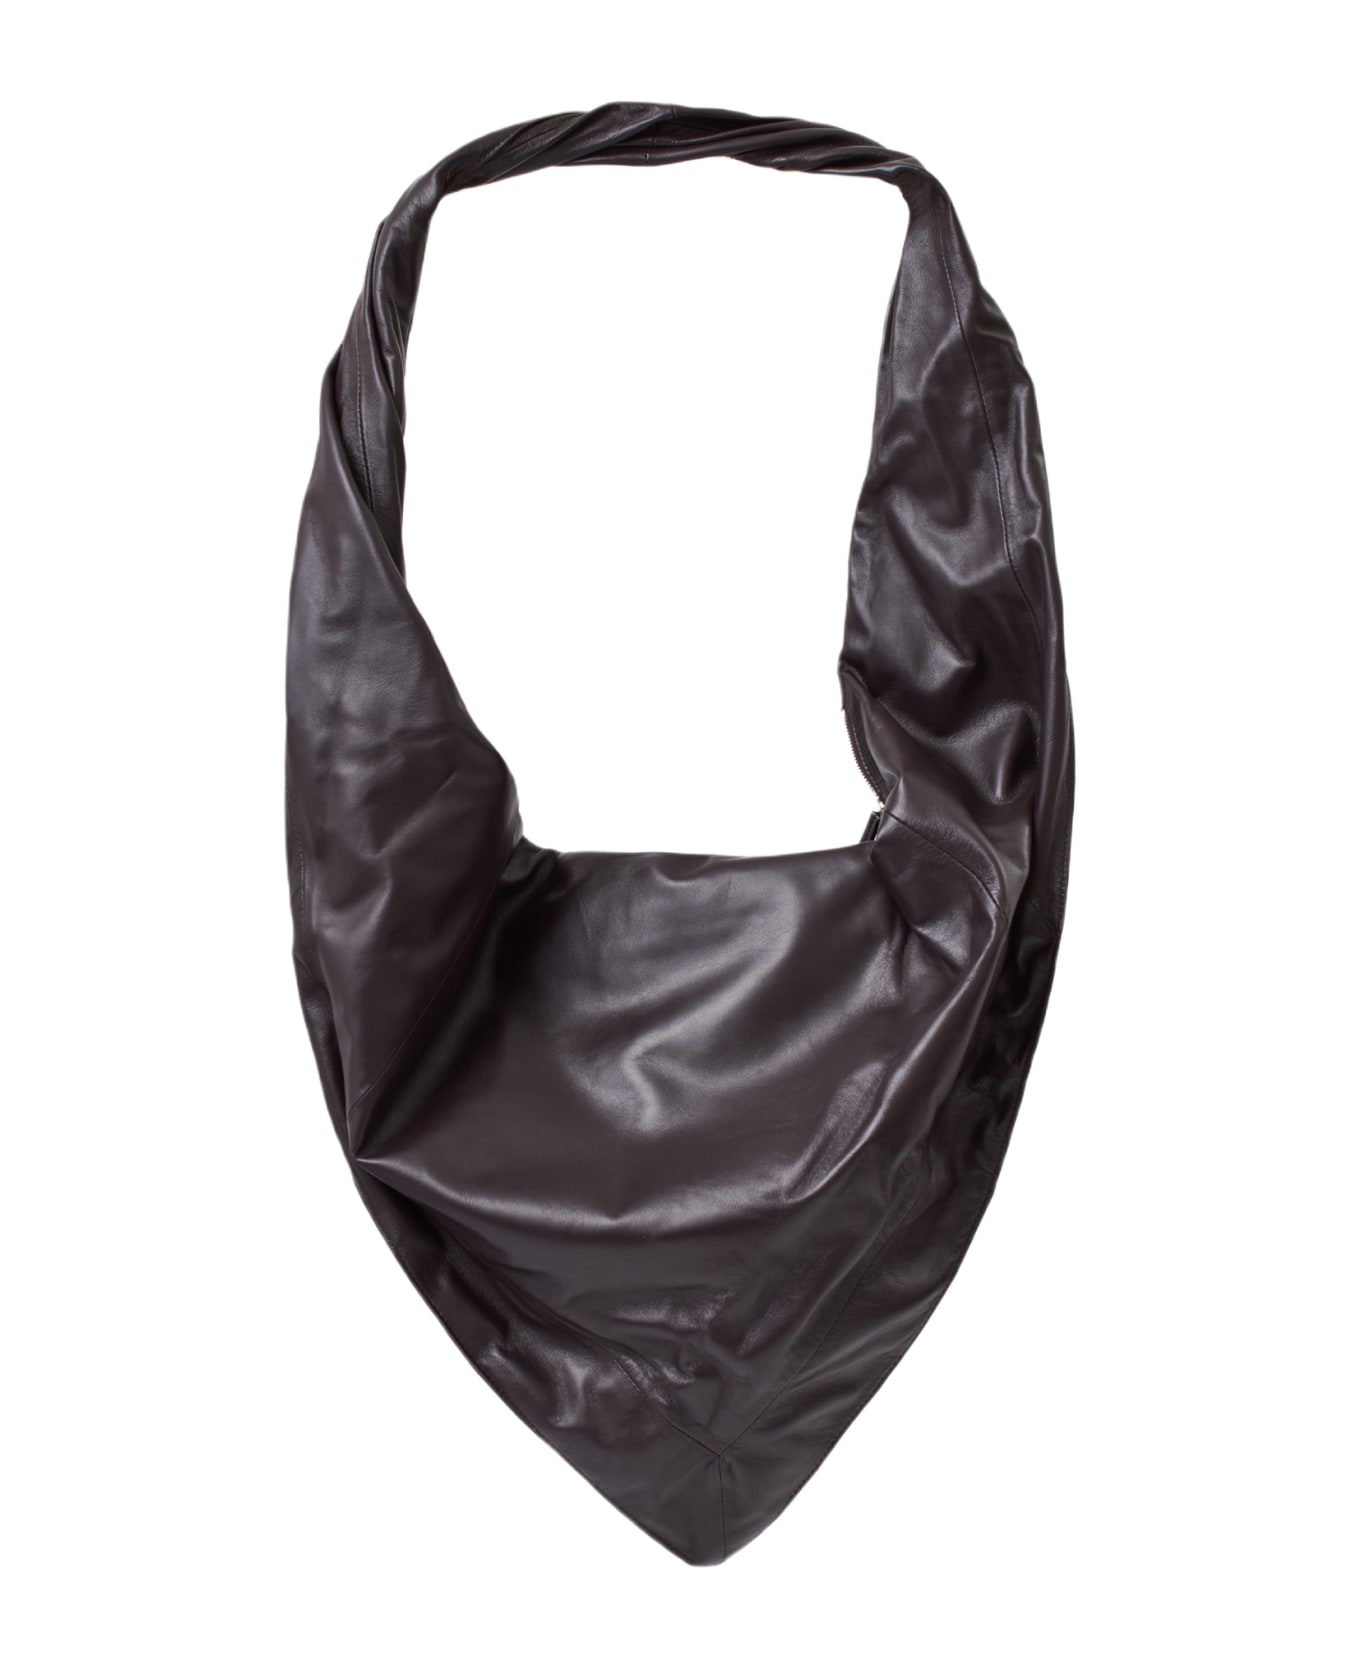 Lemaire Scarf Bag Bag - brown